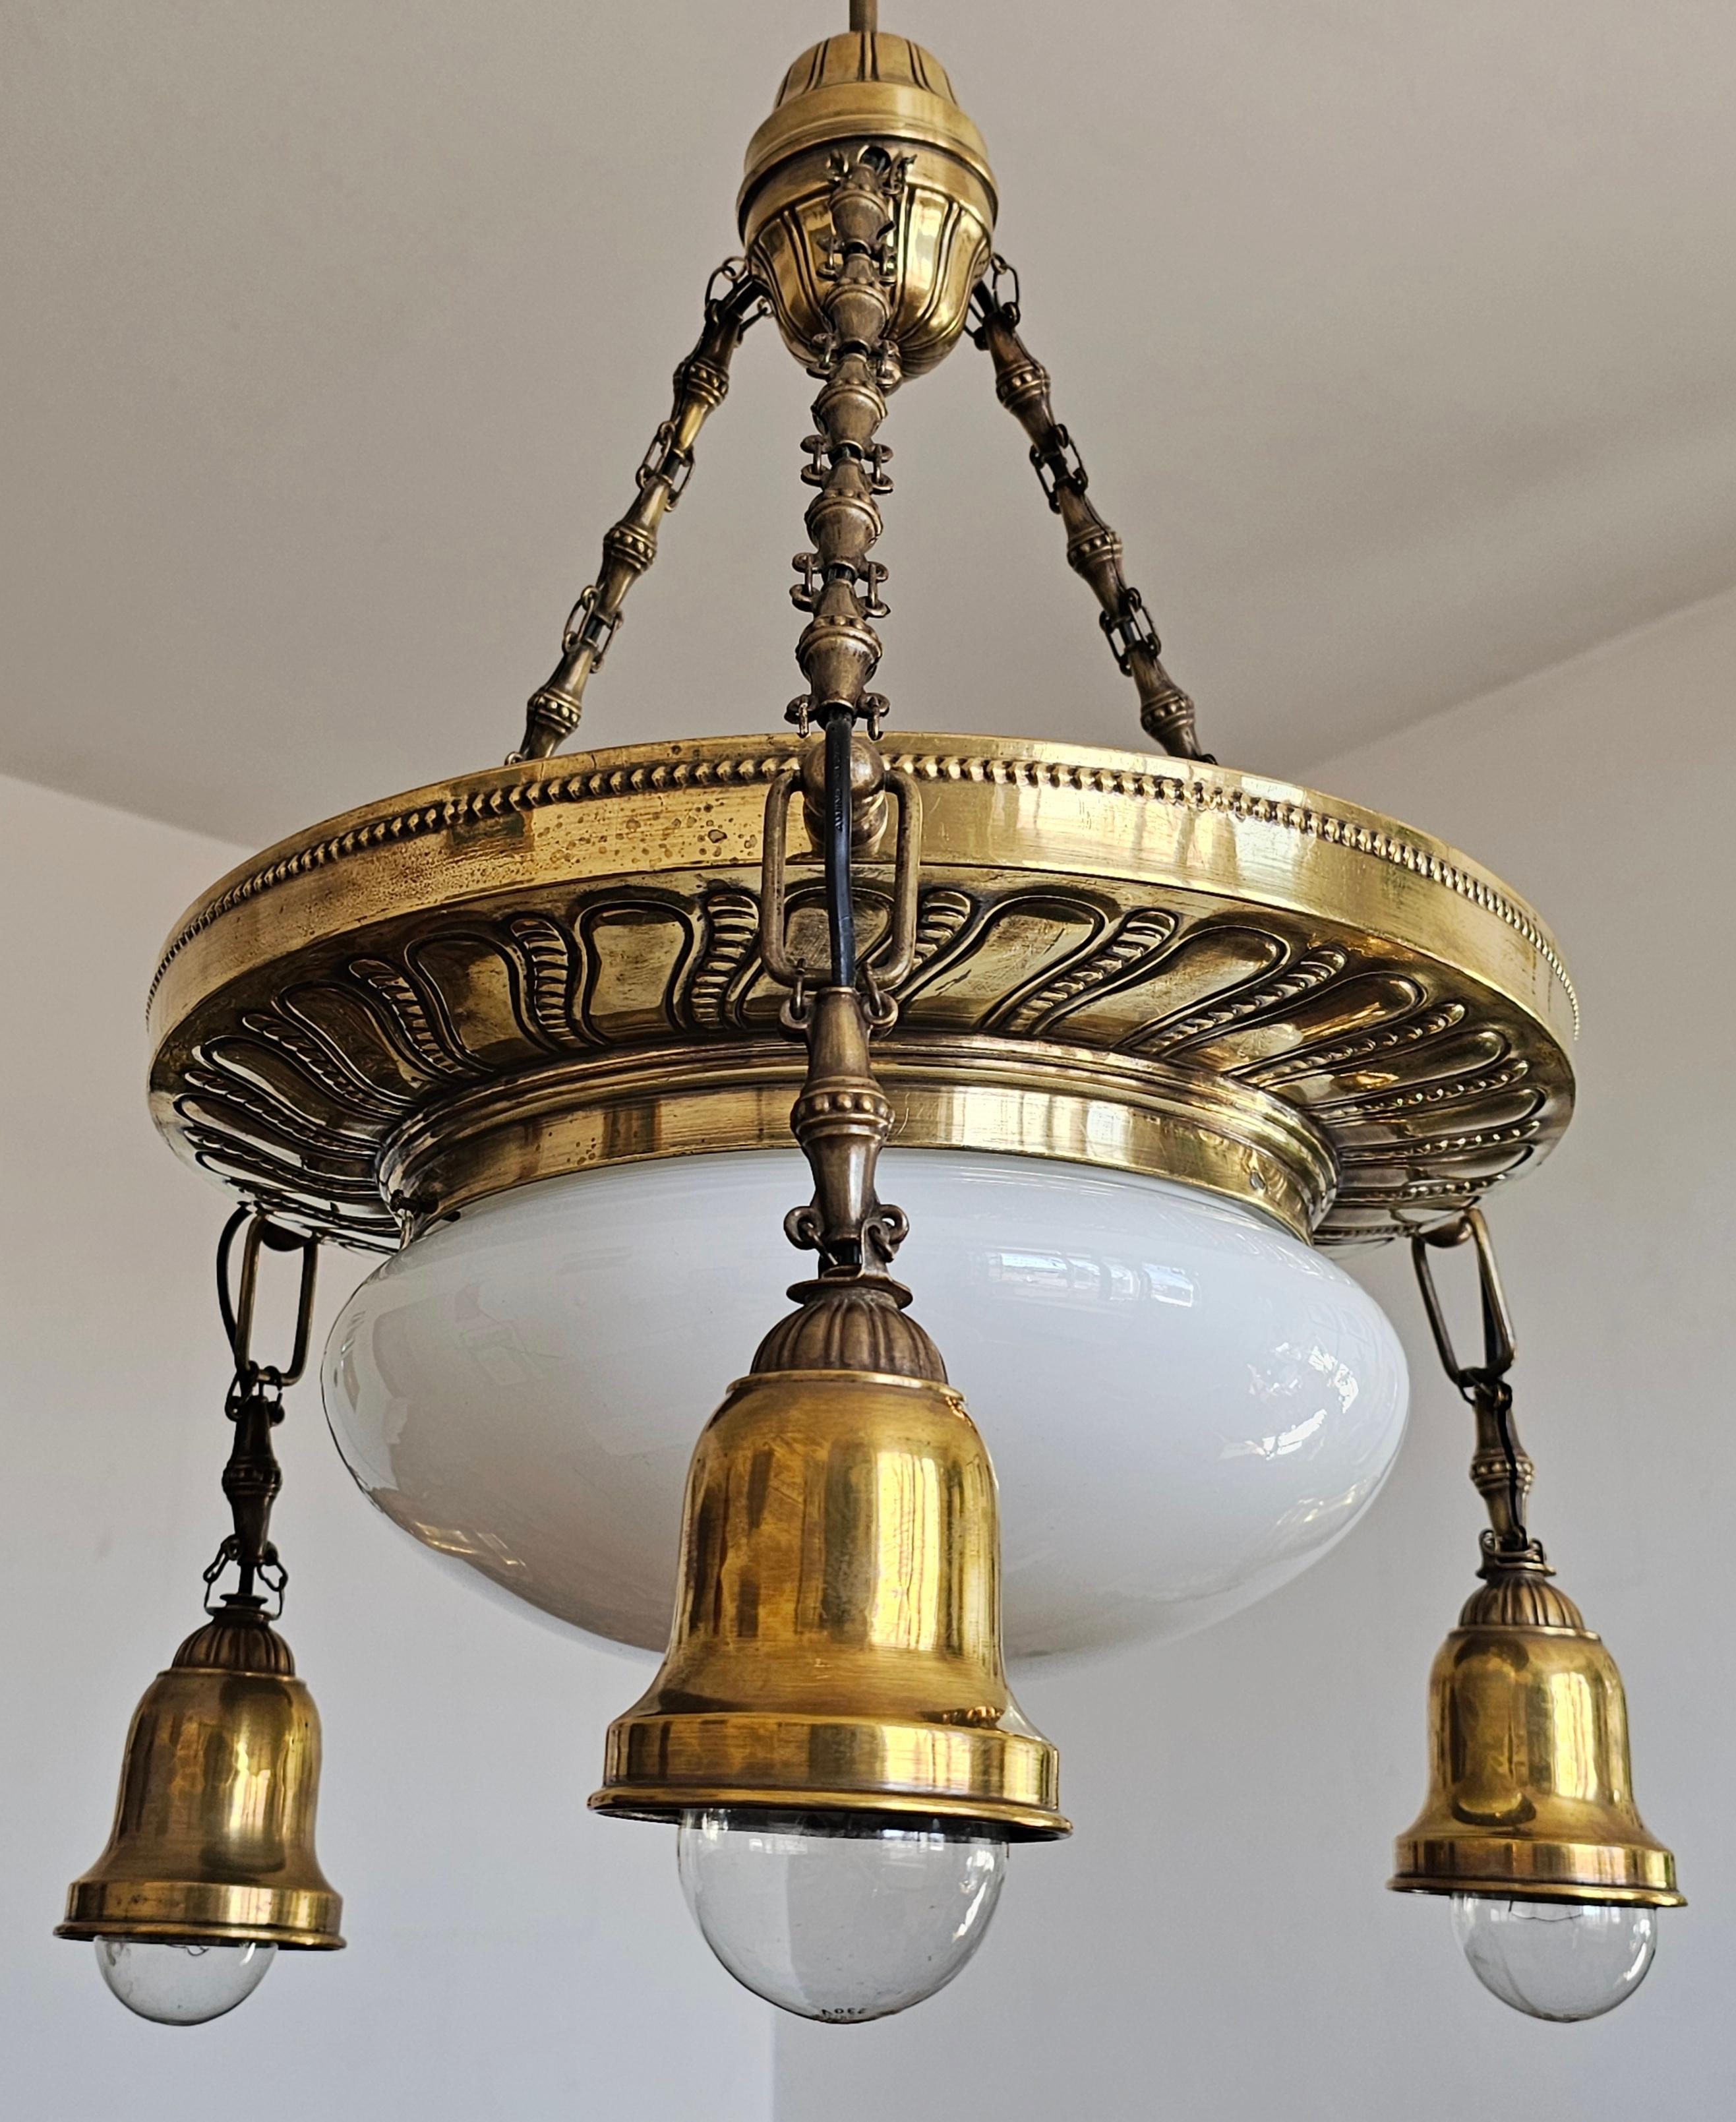 Vienna Secession Art Nouveau Polished Brass Chandelier with Opaline glass dome, Austria 1910s For Sale